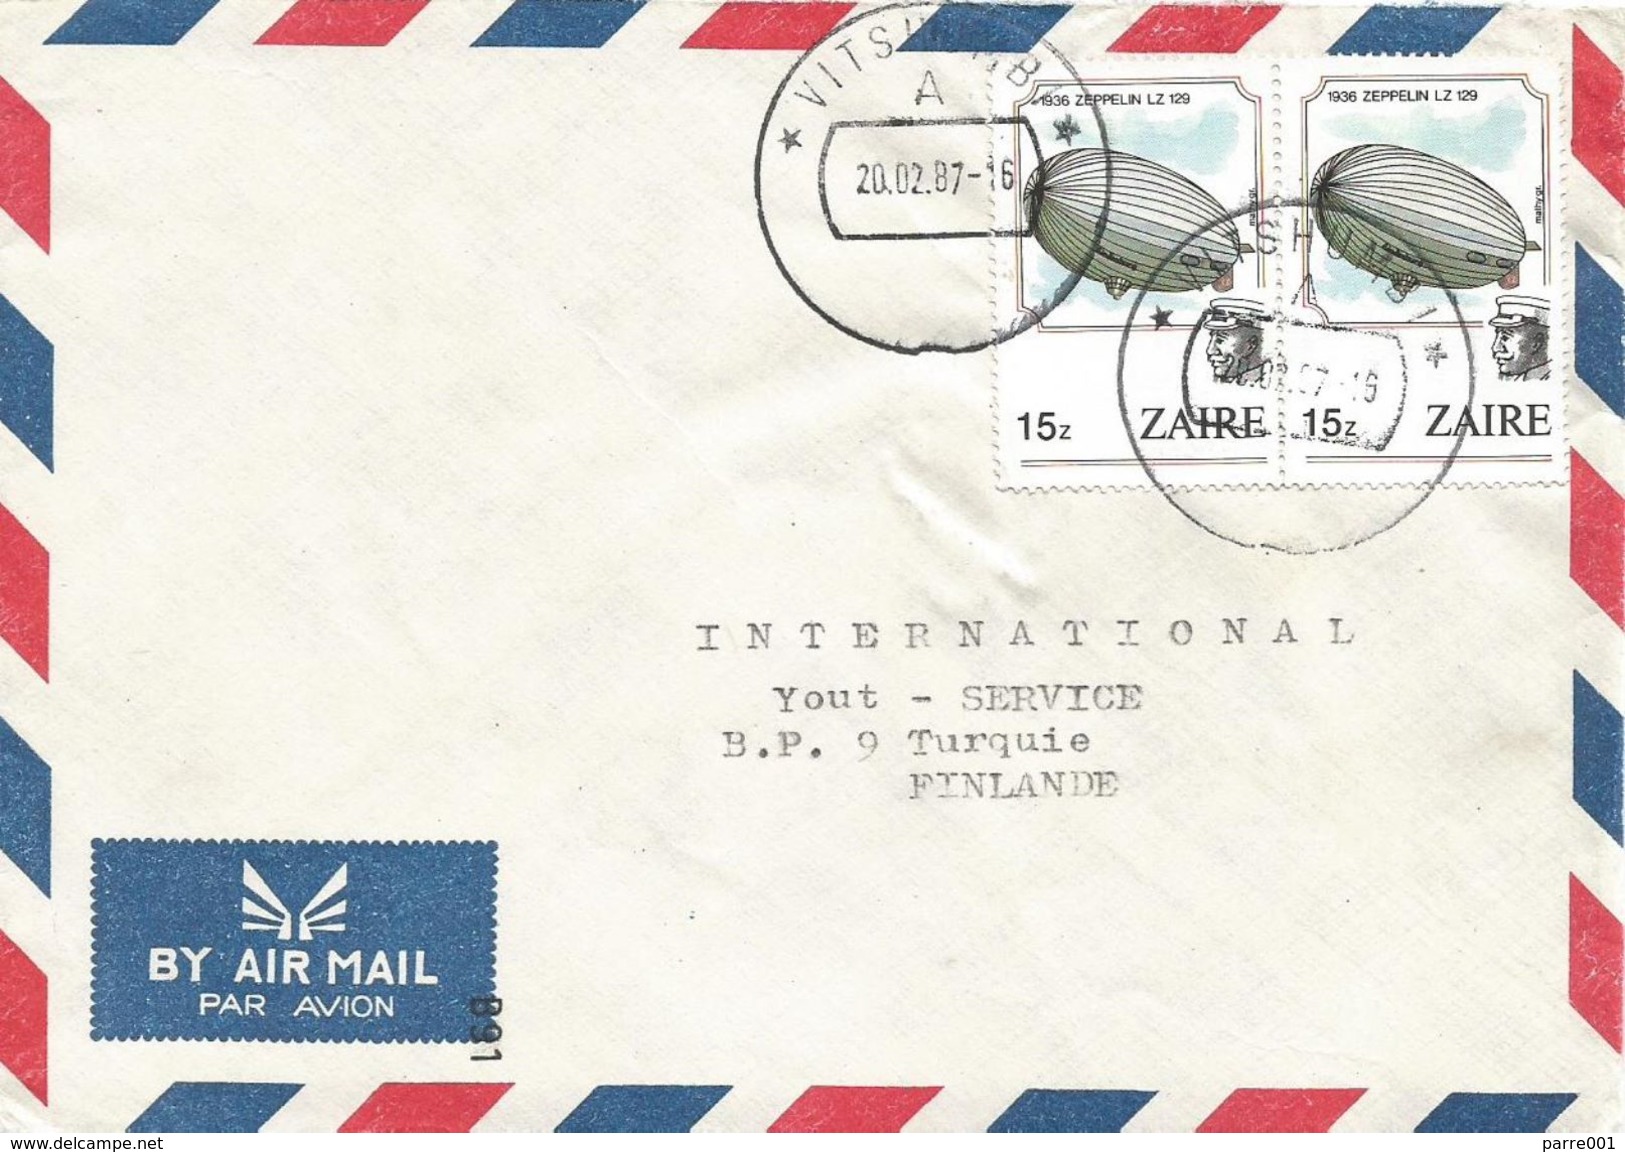 Zaire Congo 1987 Vitshumbi Zeppelin Air Balloon Cover - Used Stamps